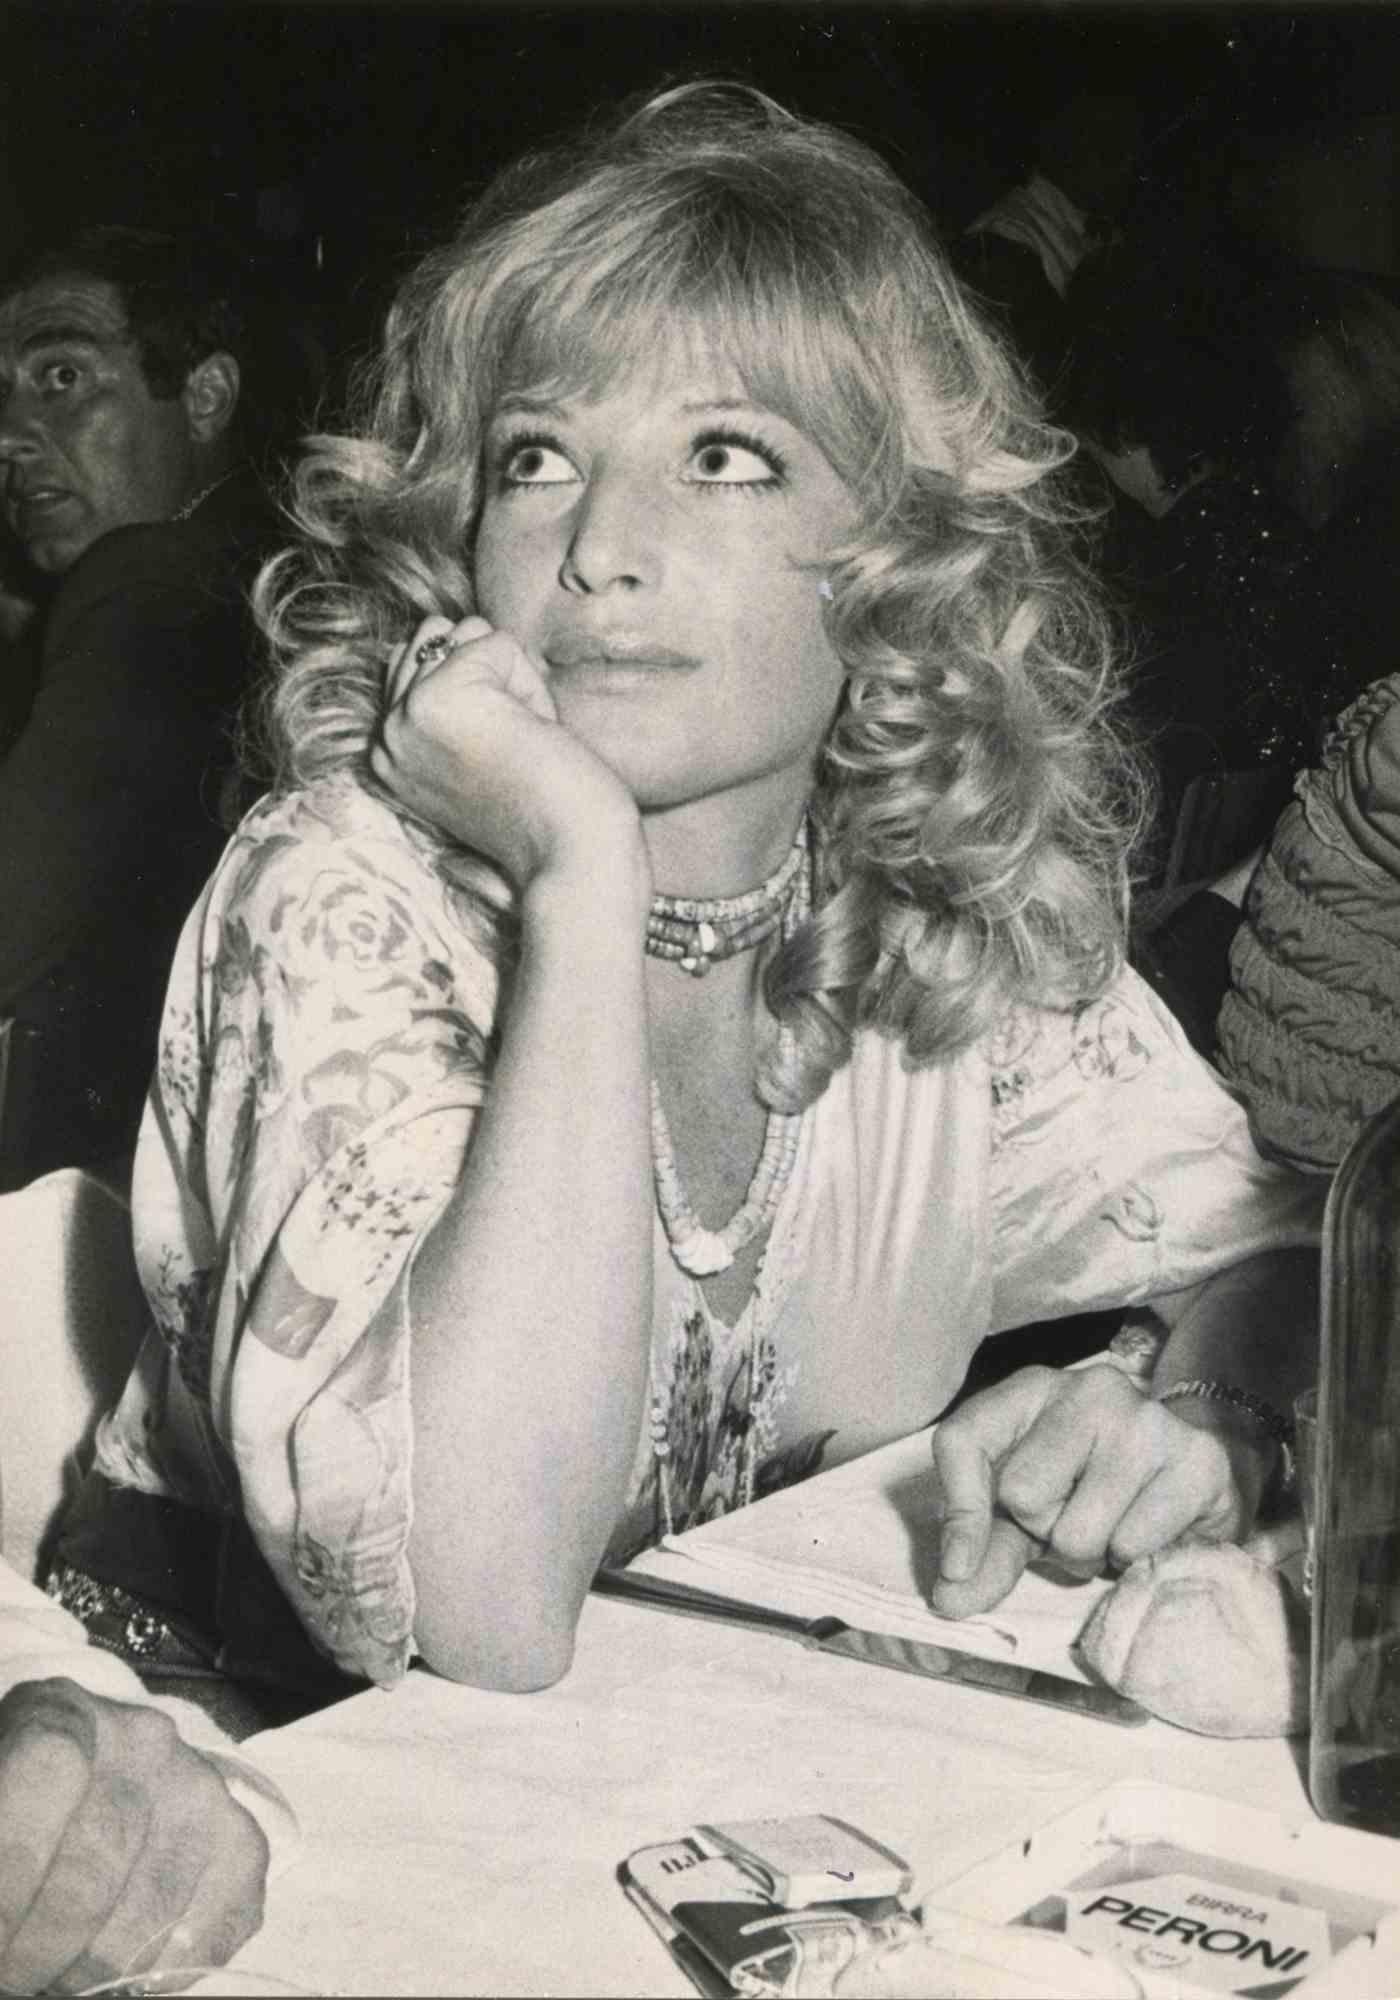 Portrait of Monica Vitti - Vintage B/W photo - 1970s